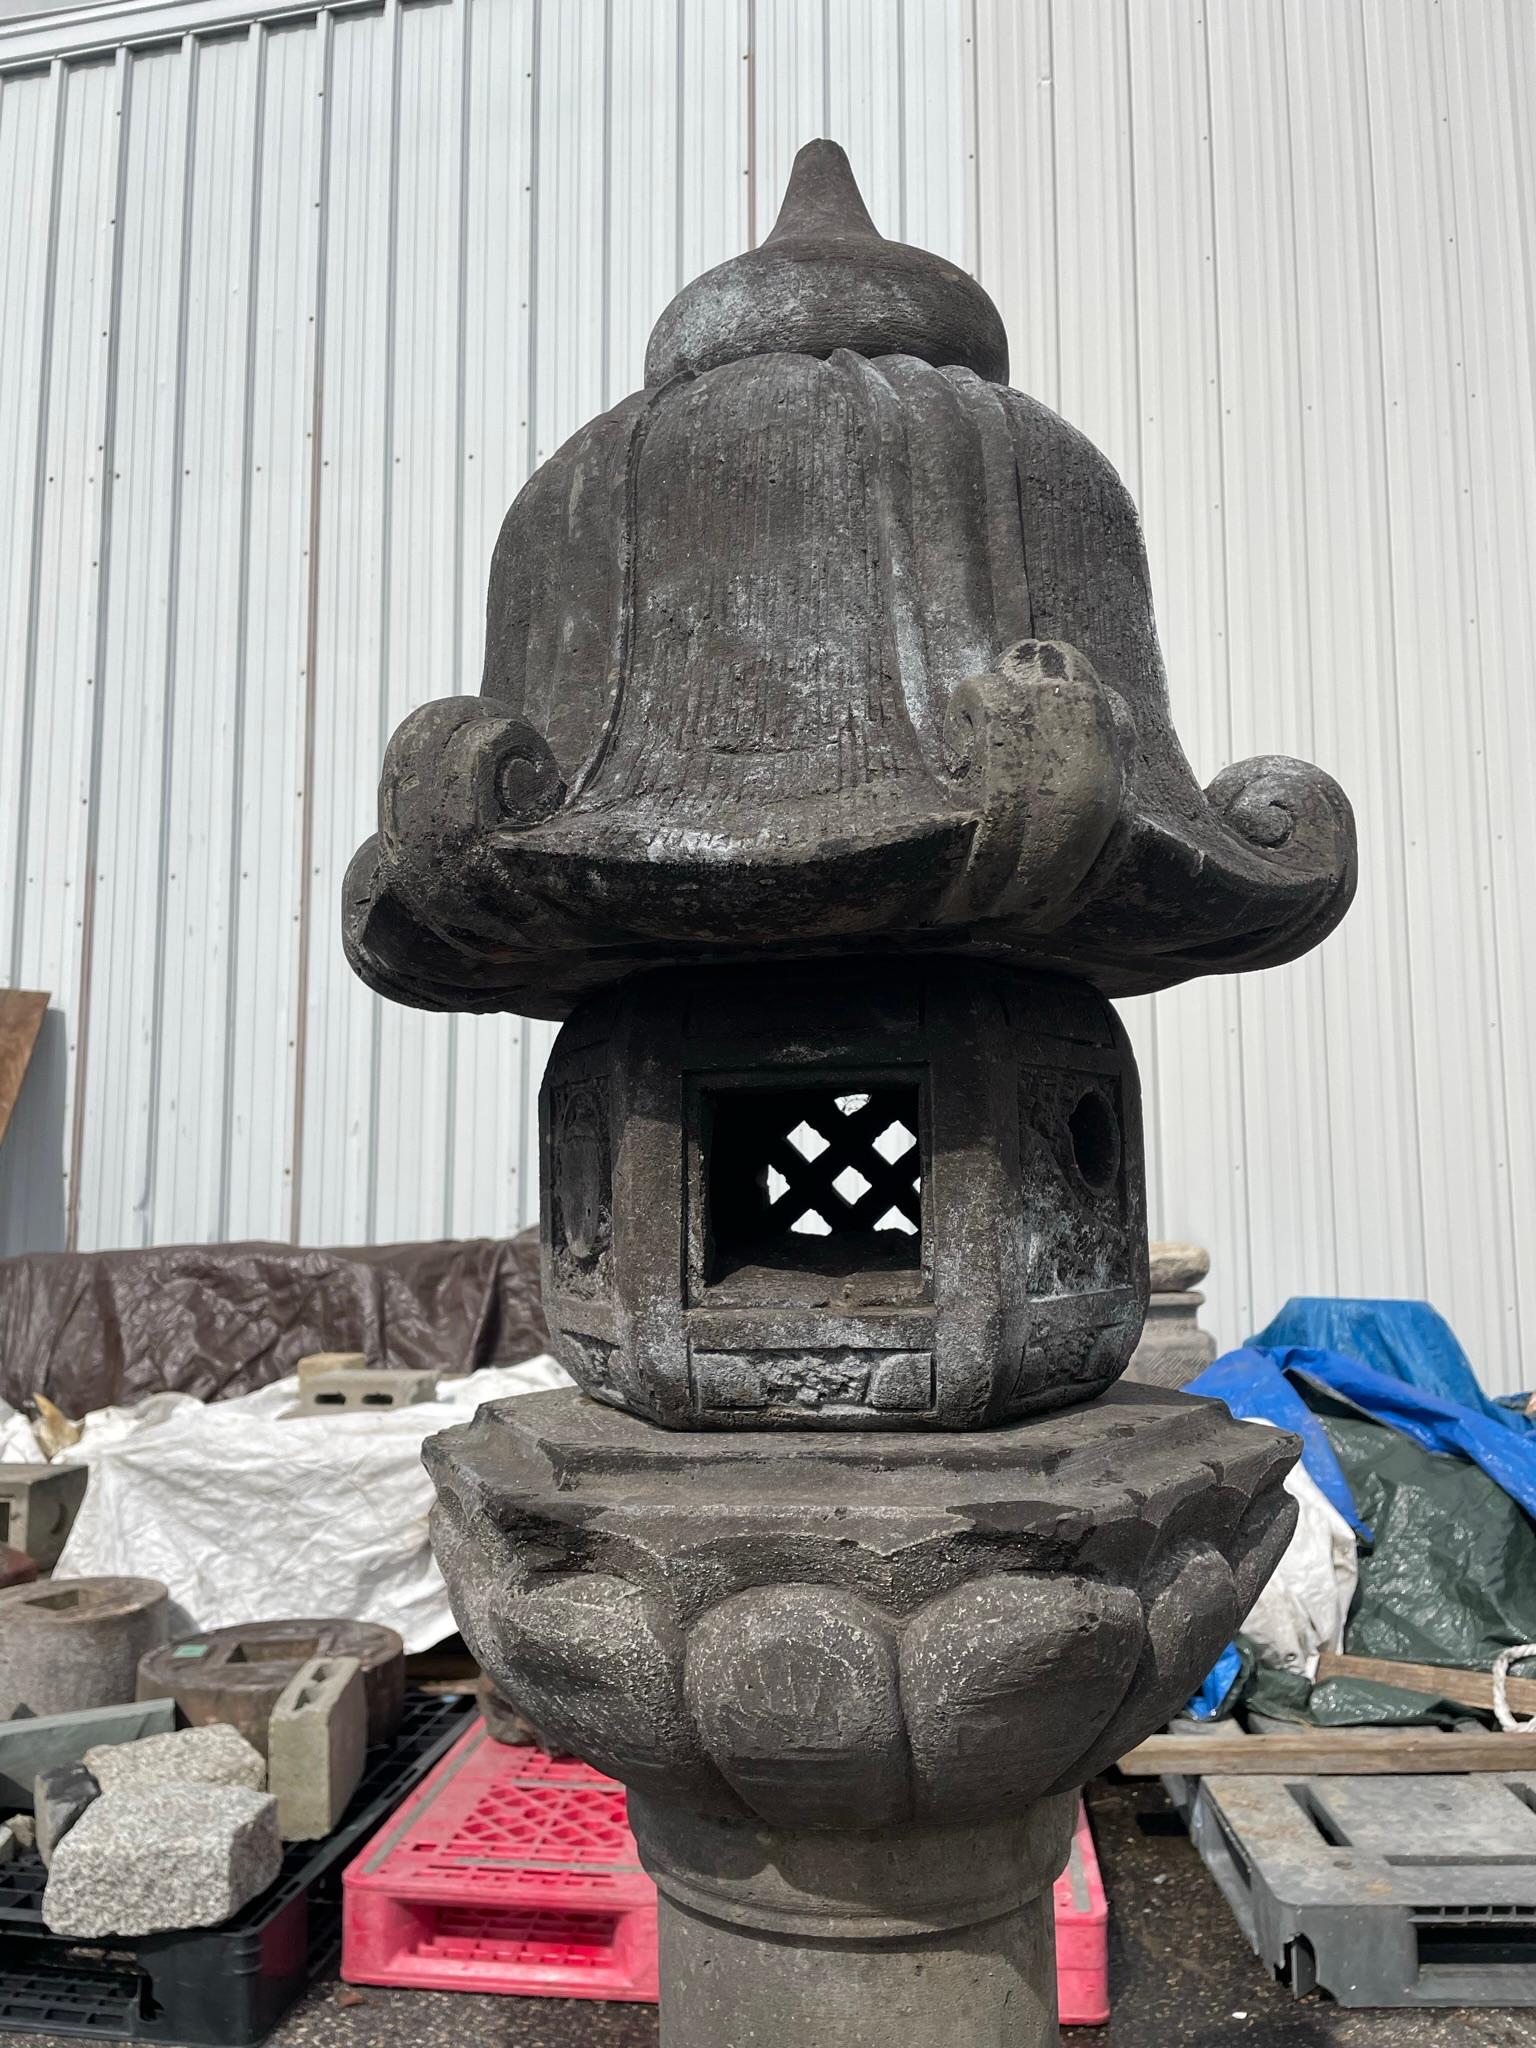 japanese stone lantern